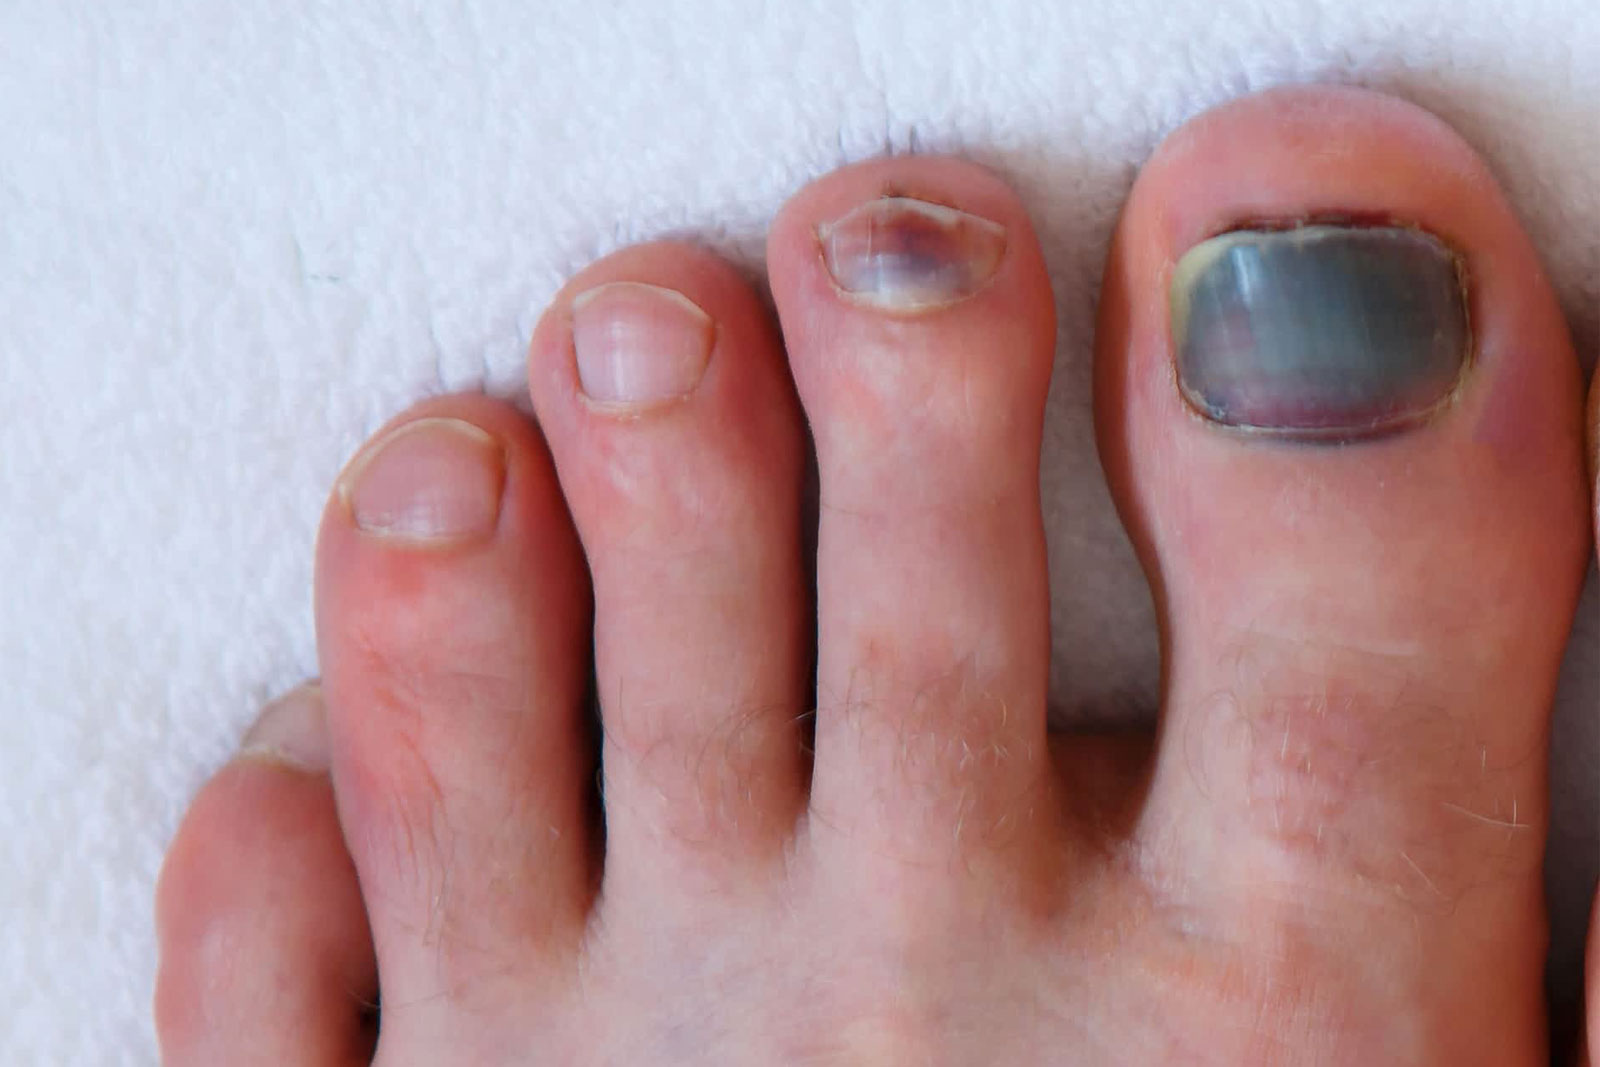 THE PODIATRY - Subungual haematomas (Bleeding under nail)